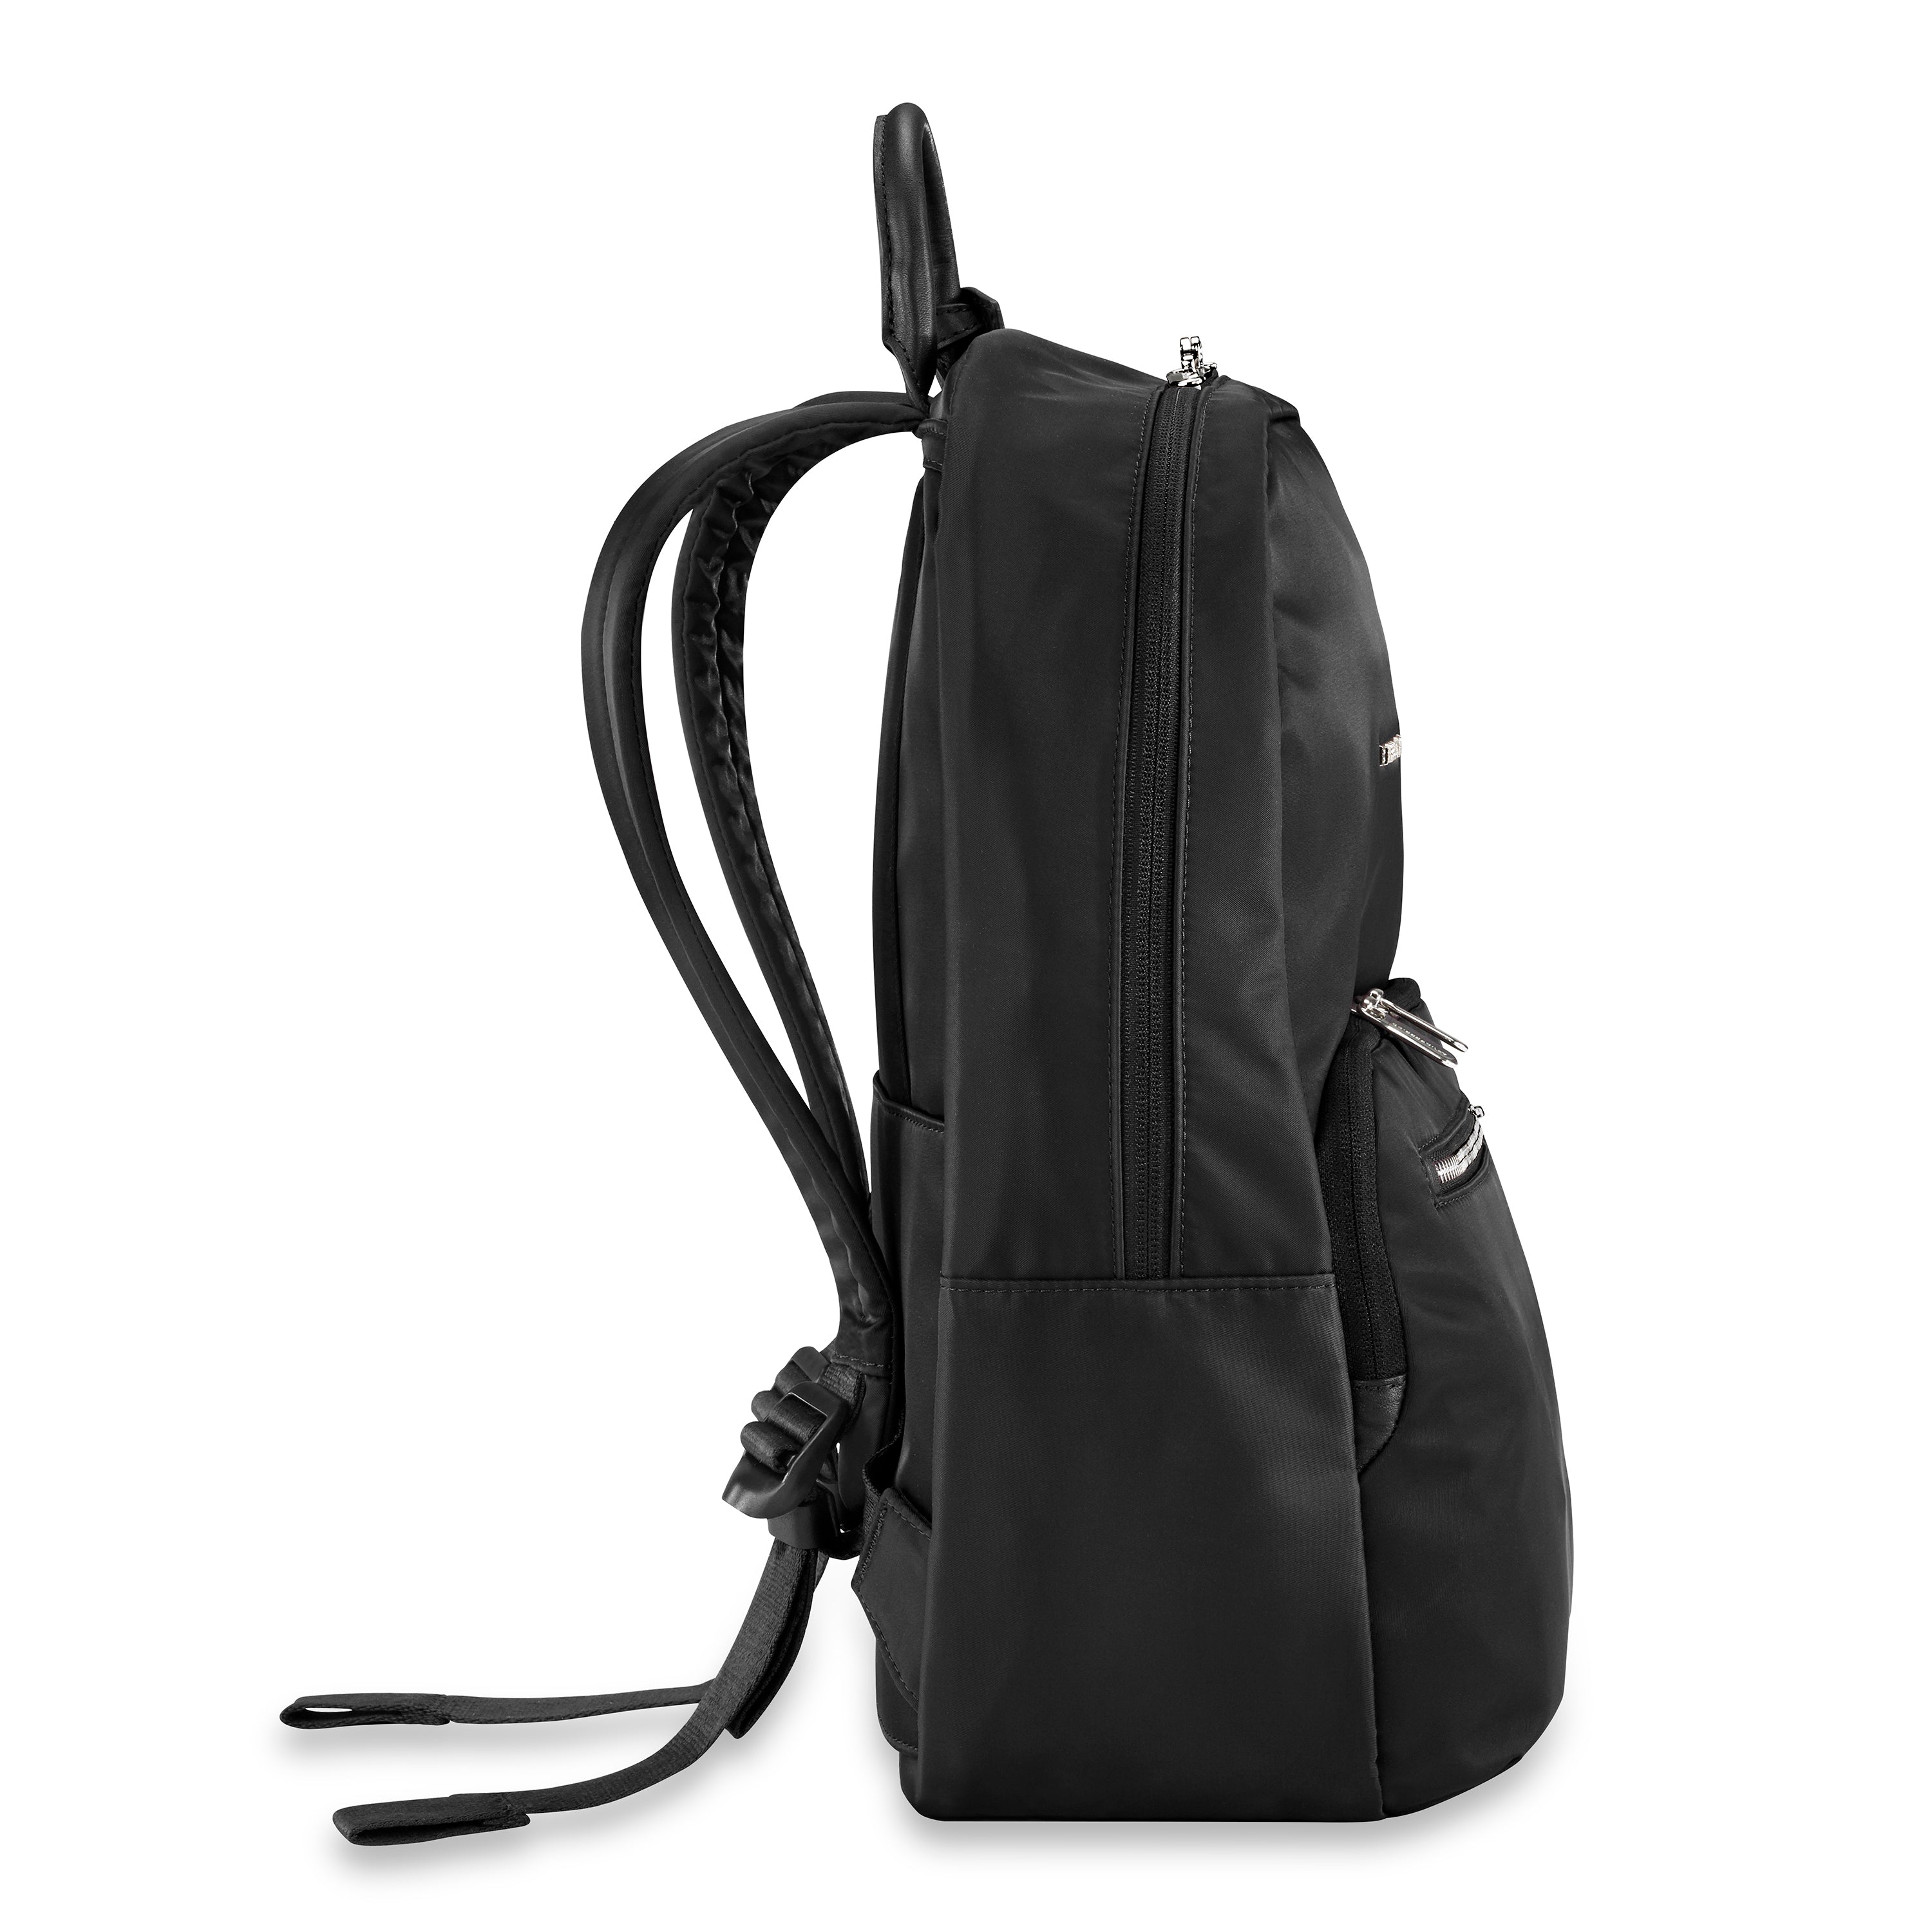 Briggs & Riley Rhapsody Essential Backpack - Black